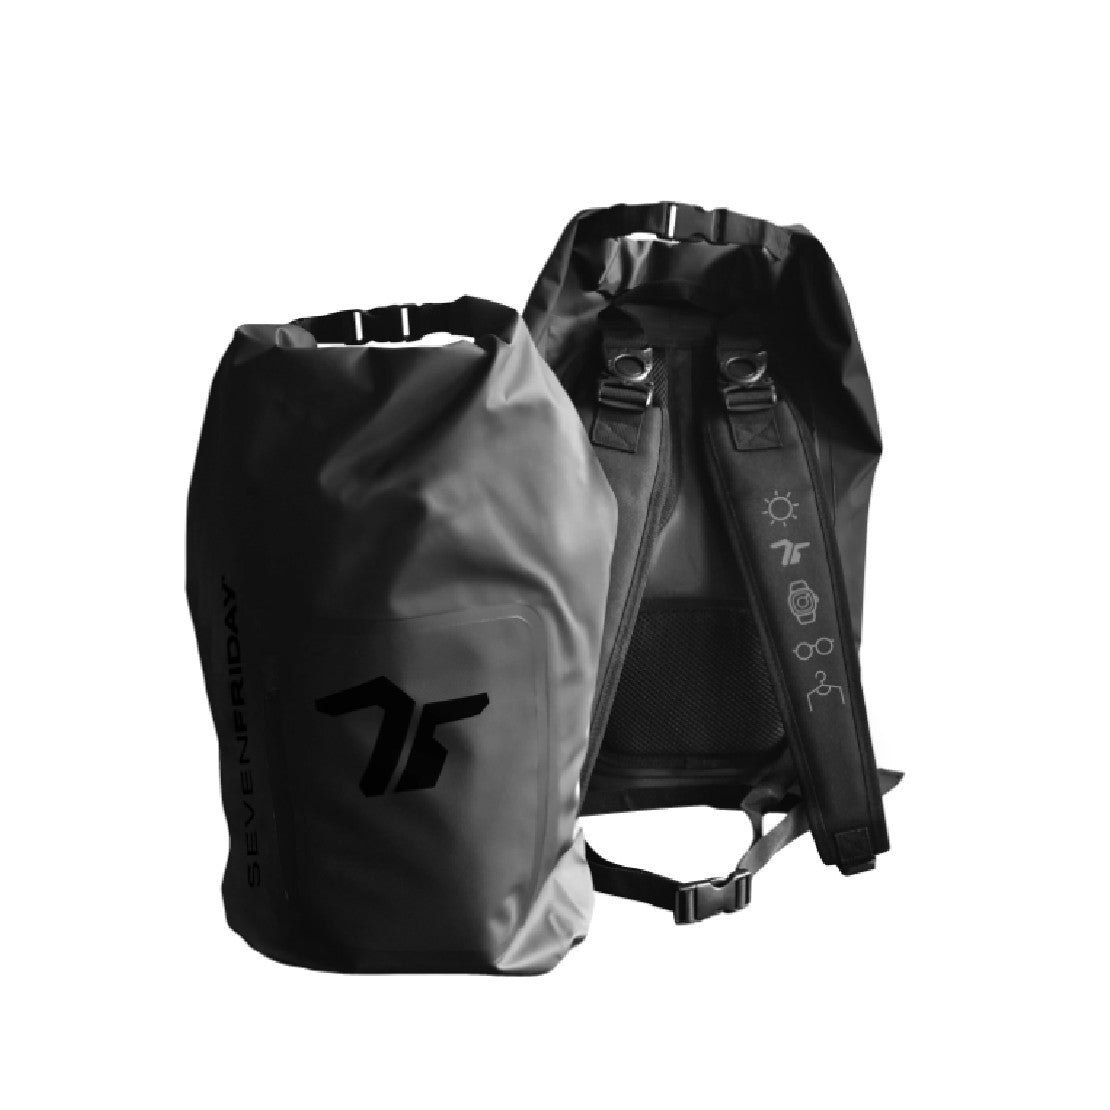 Sevenfriday Black Water Resistant Bag for Men and Women - SFBG-0001